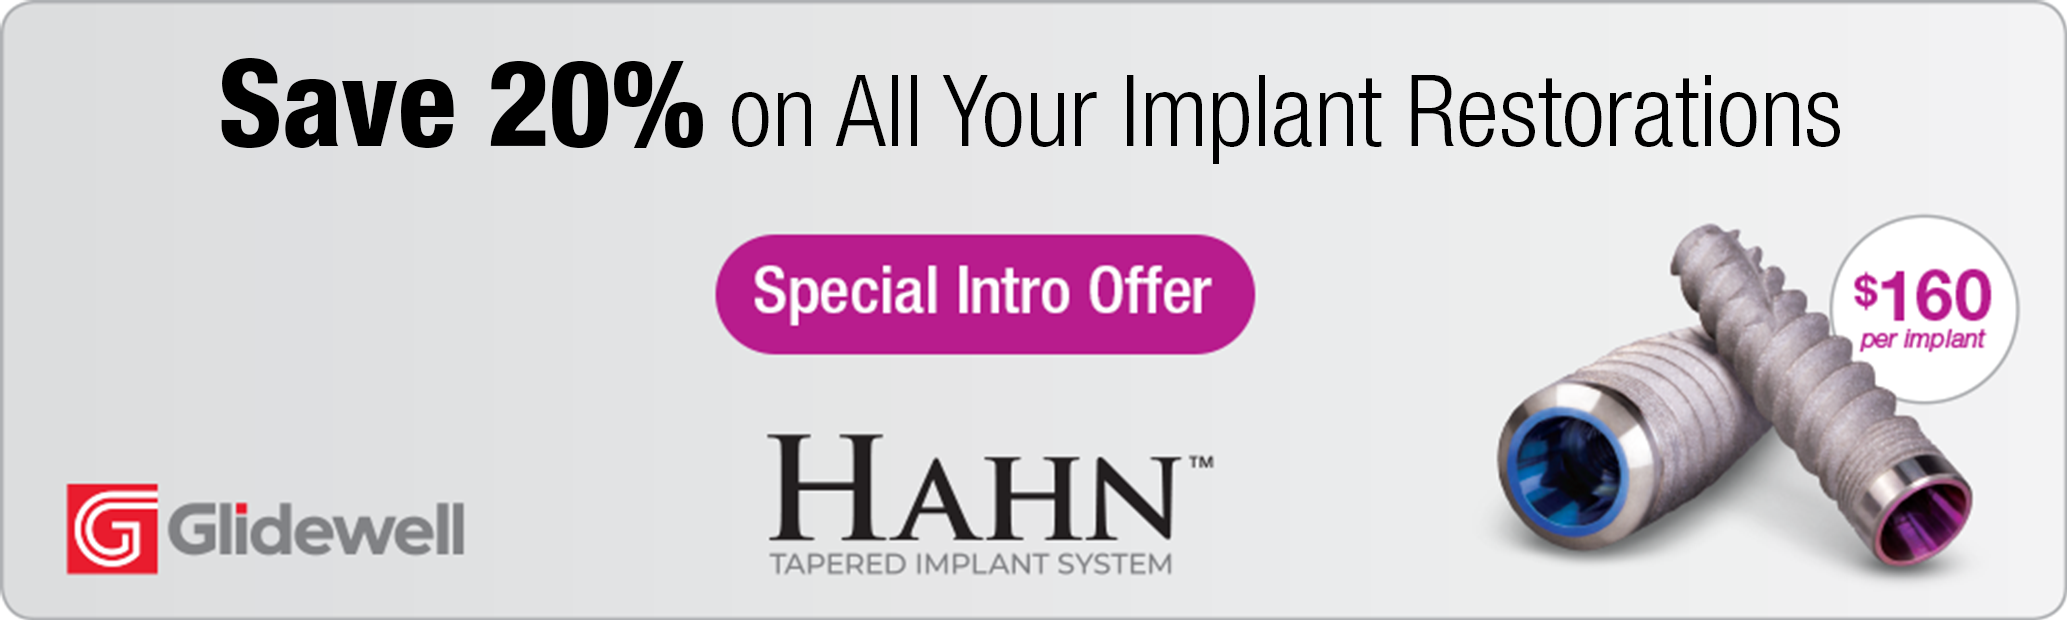 Save 20% on Hahn Implant Restorations Banner ad